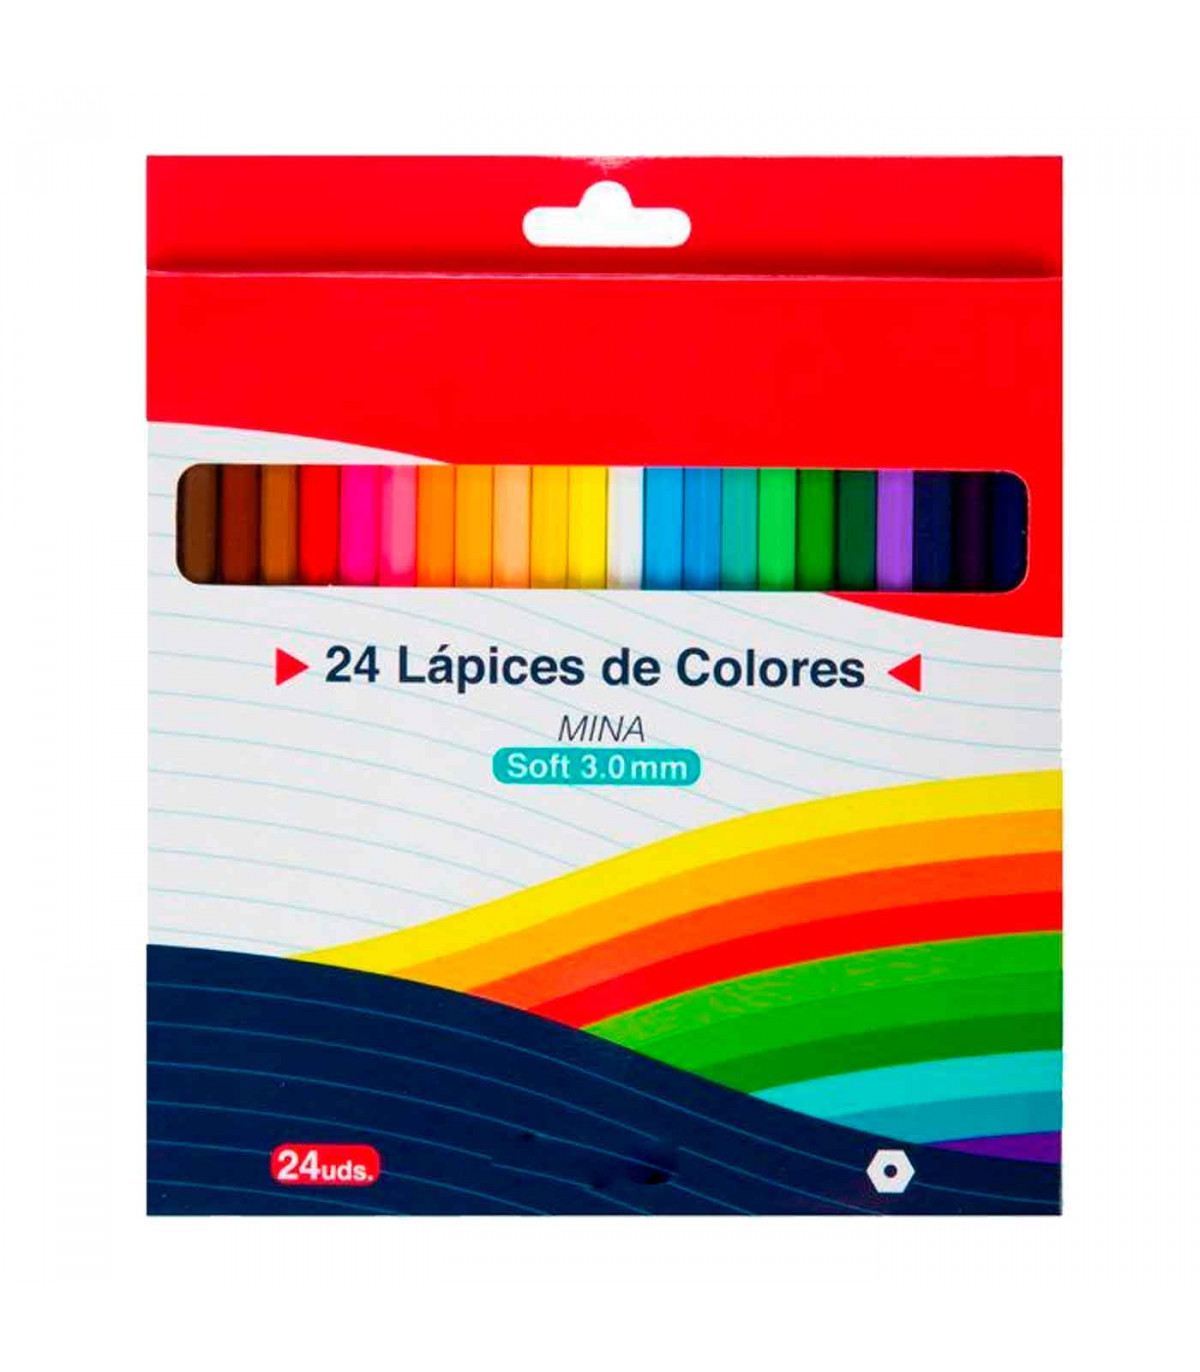 Tradineur - Caja de 18 lápices de colores para niños - Forma hexagonal -  Material escolar - Colores vivos - Ideal para colorear